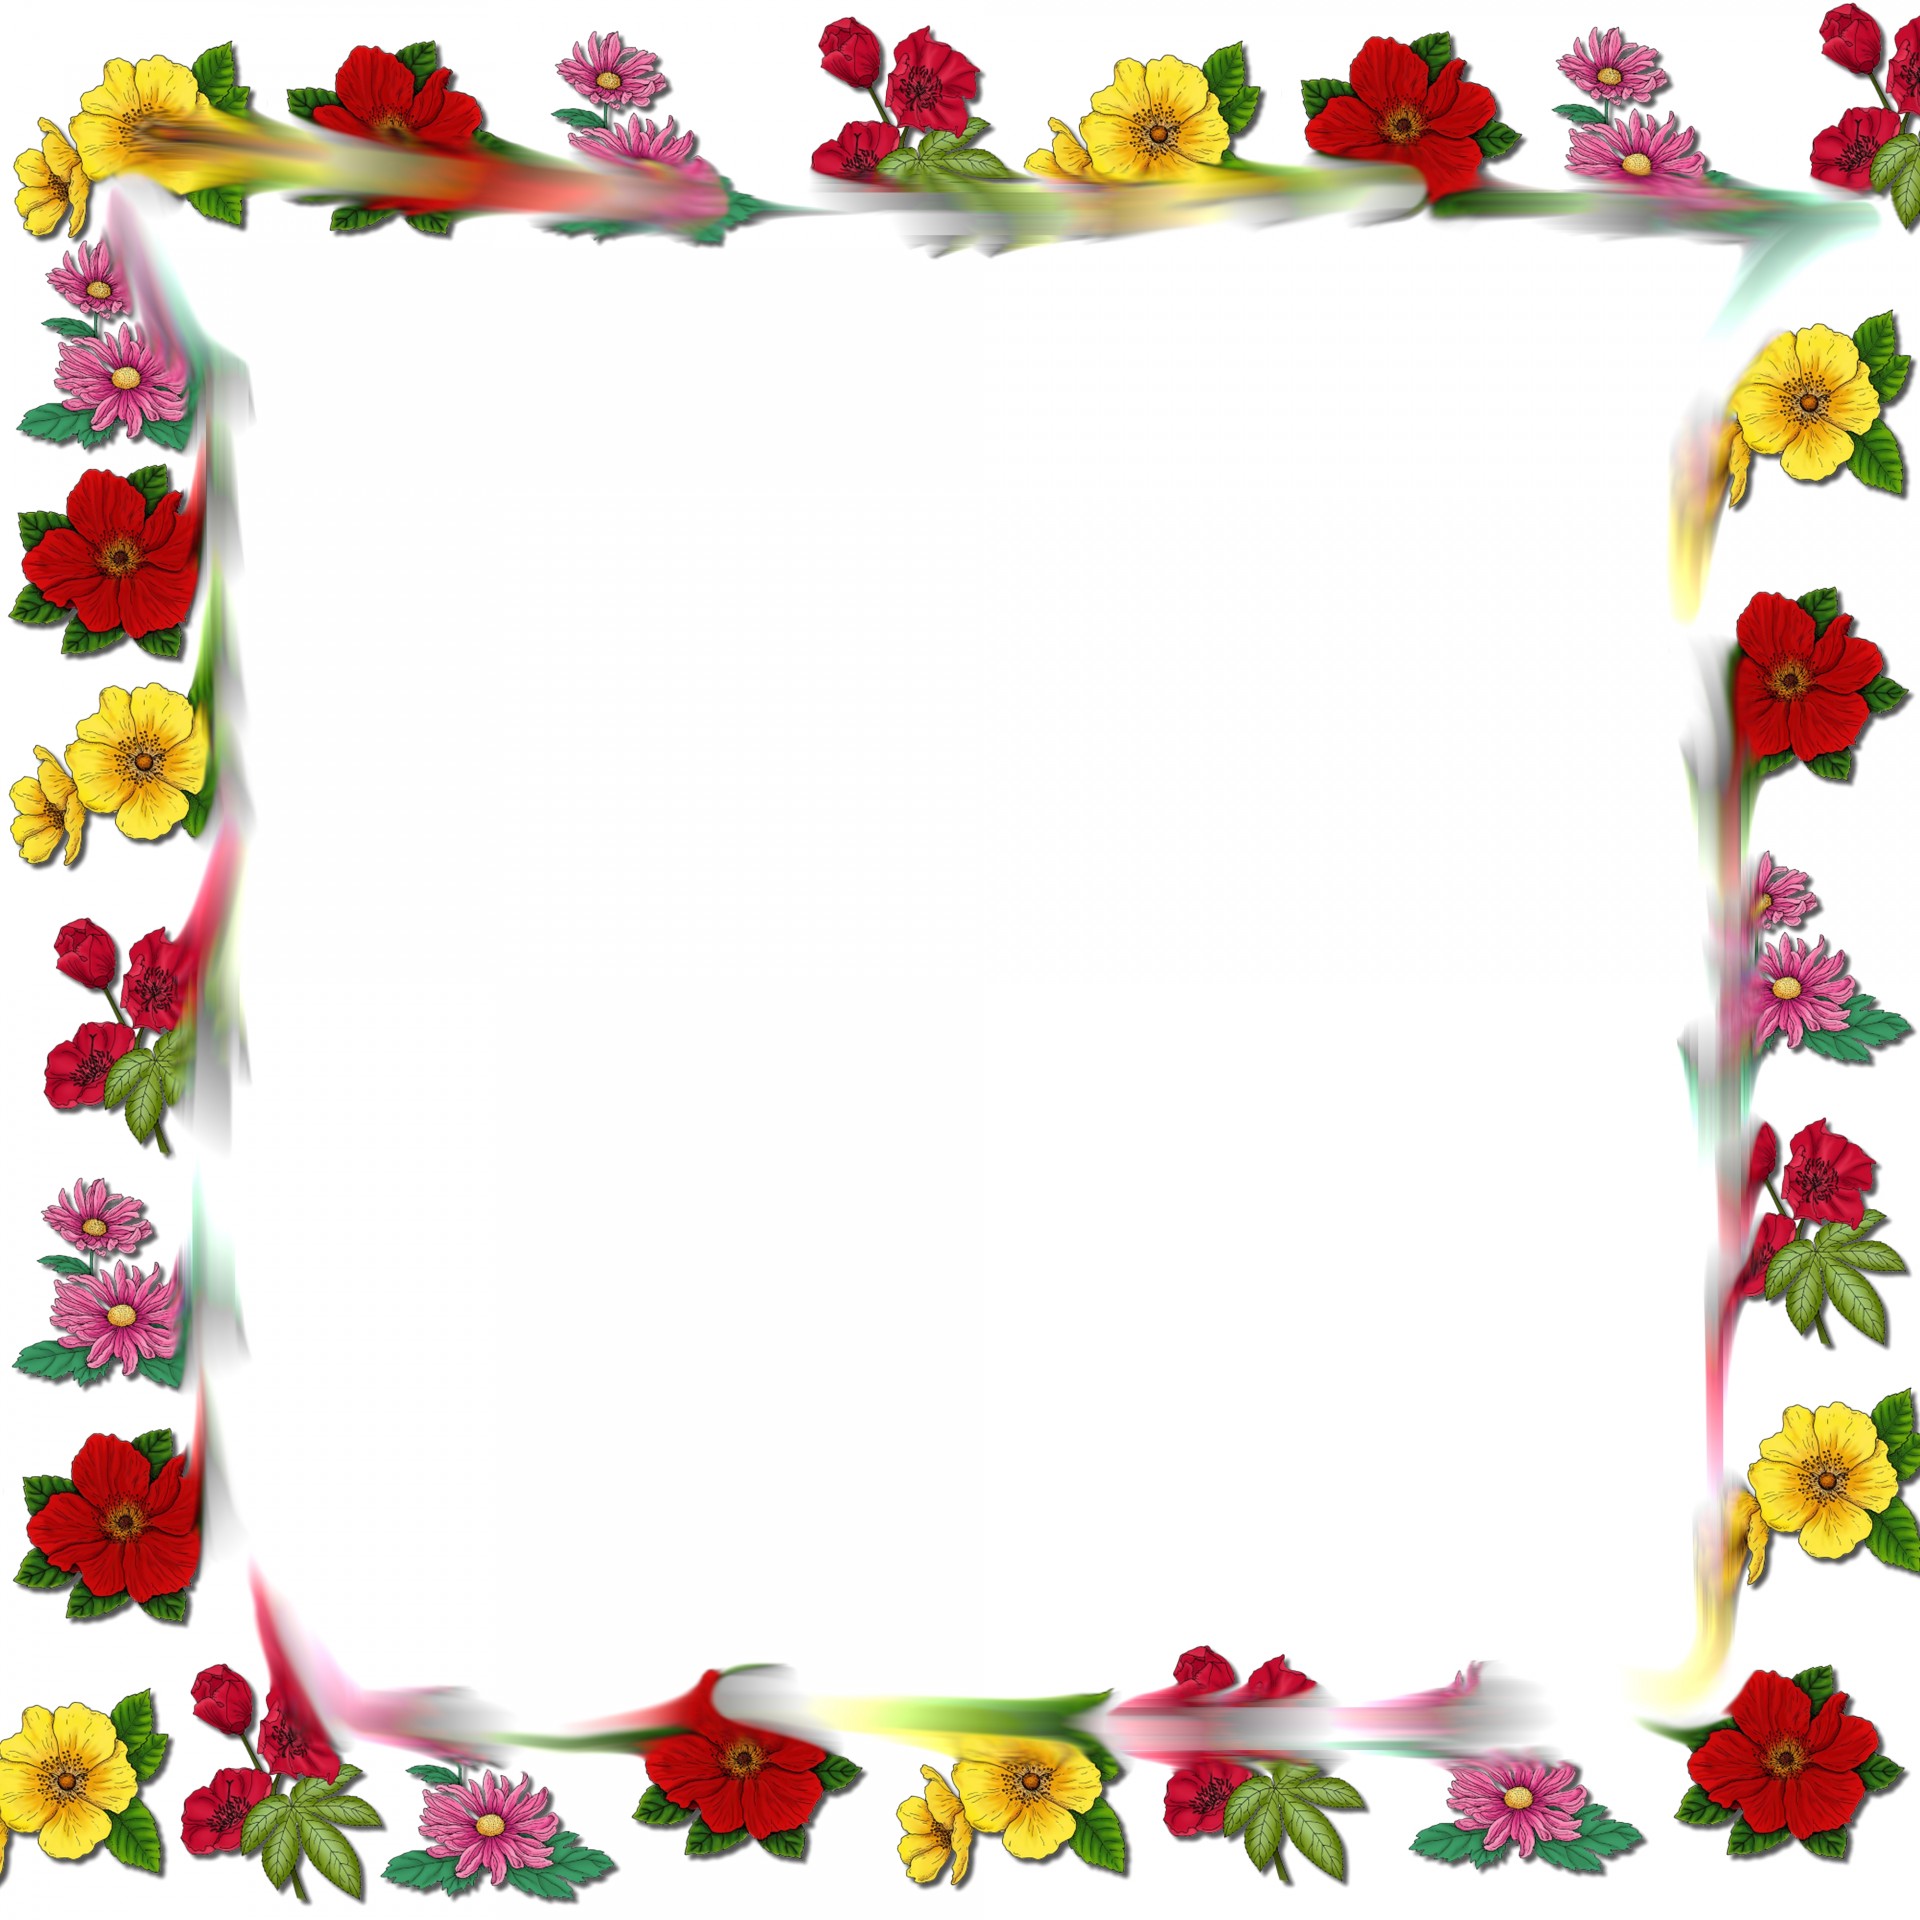 deform flower frame free photo